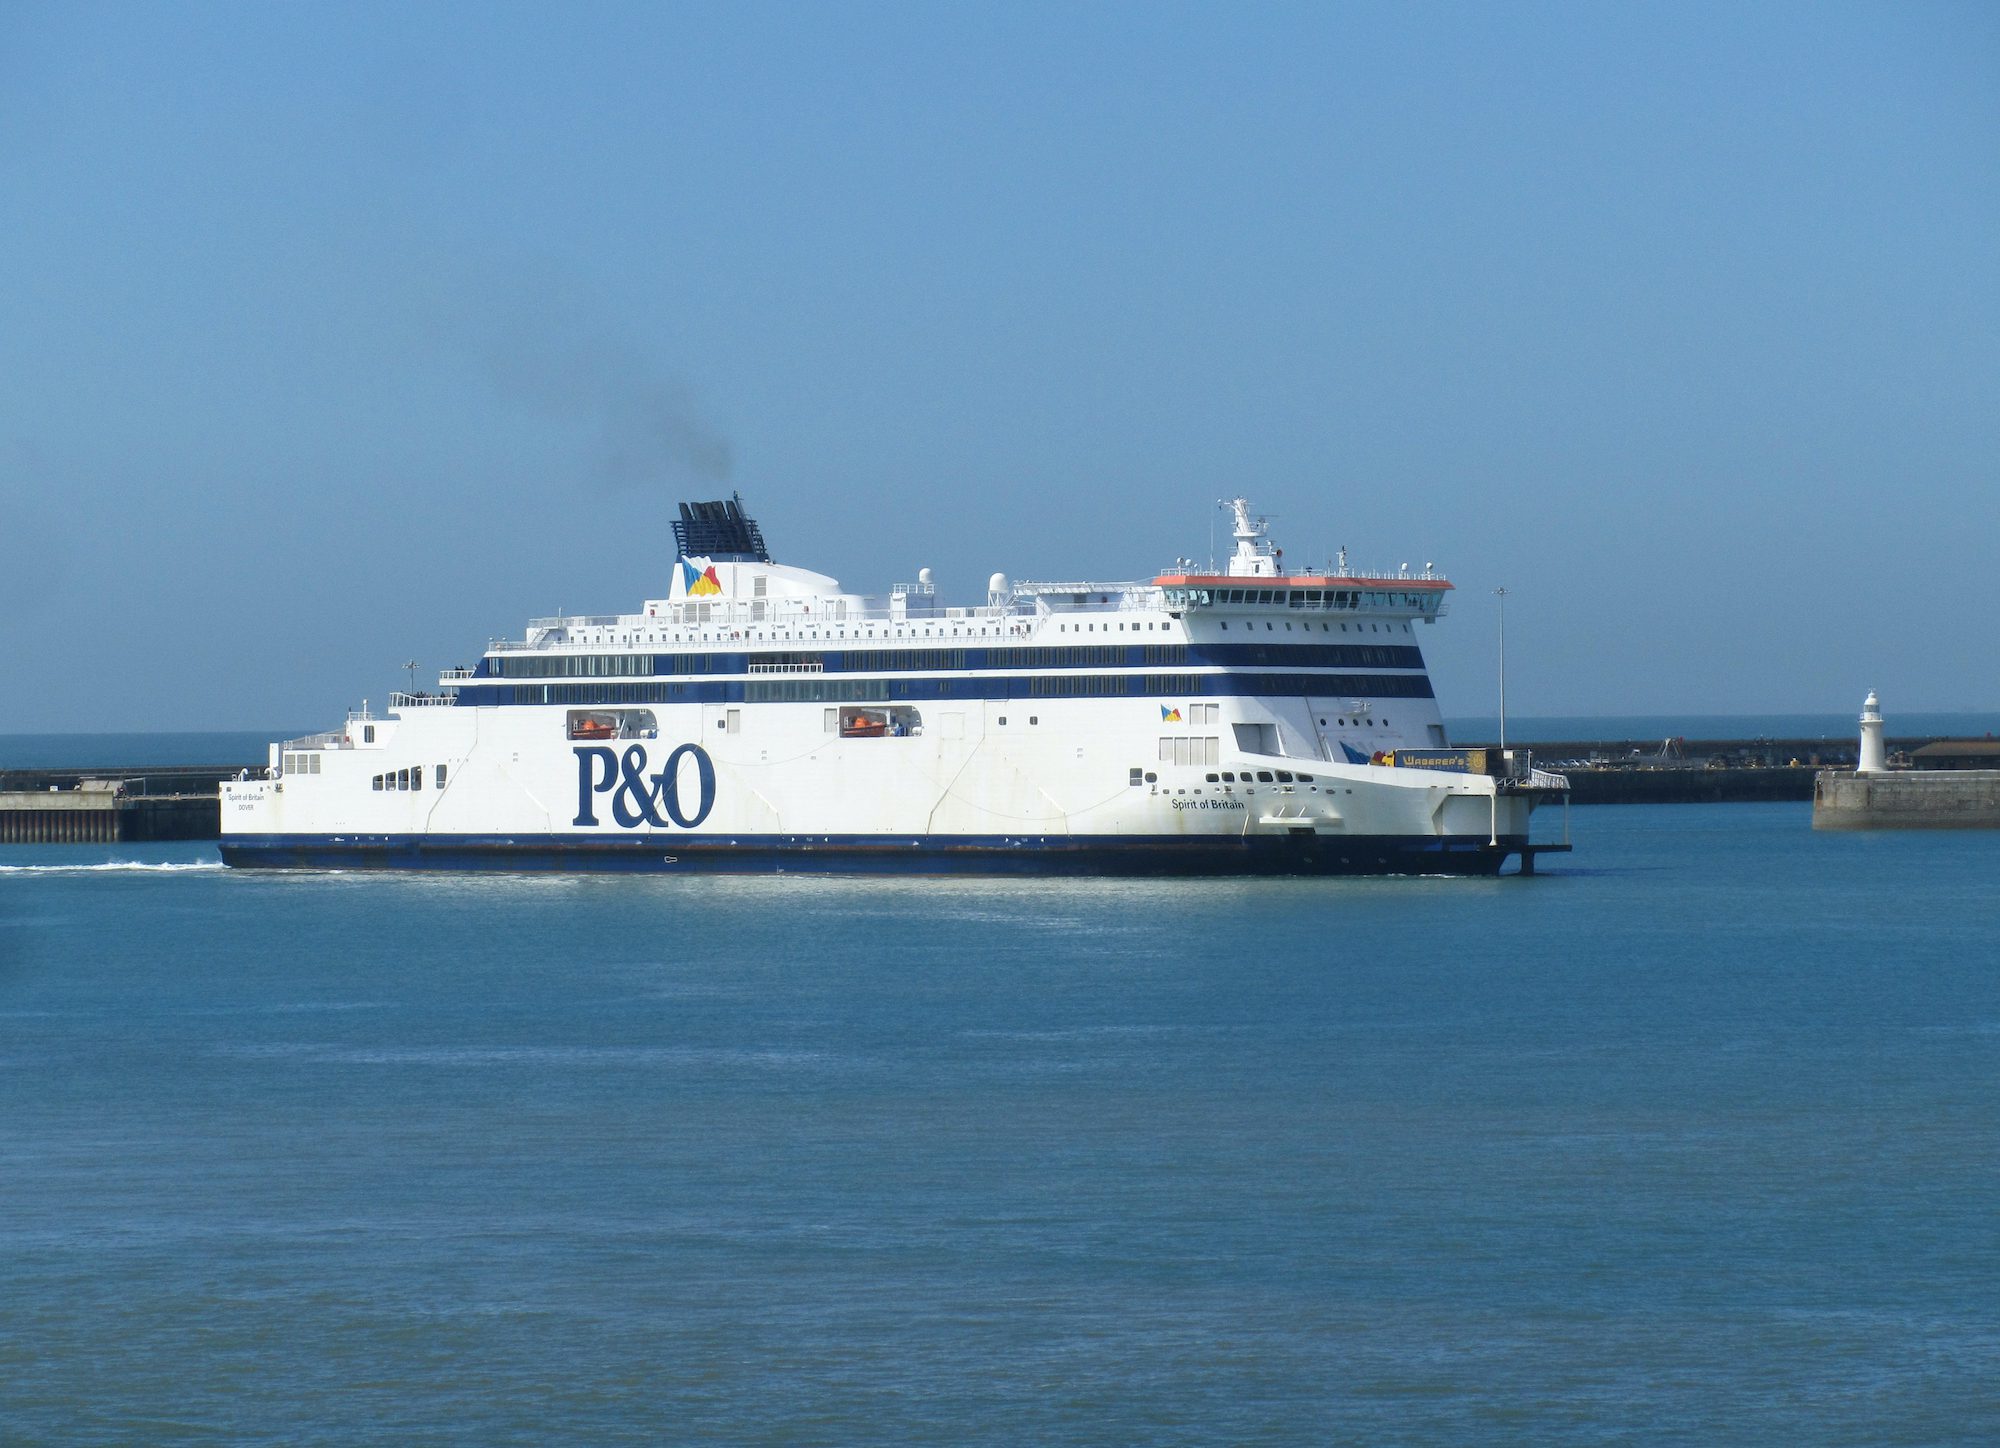 UK Pressures Ports to Block P&O Ferries Over Firings